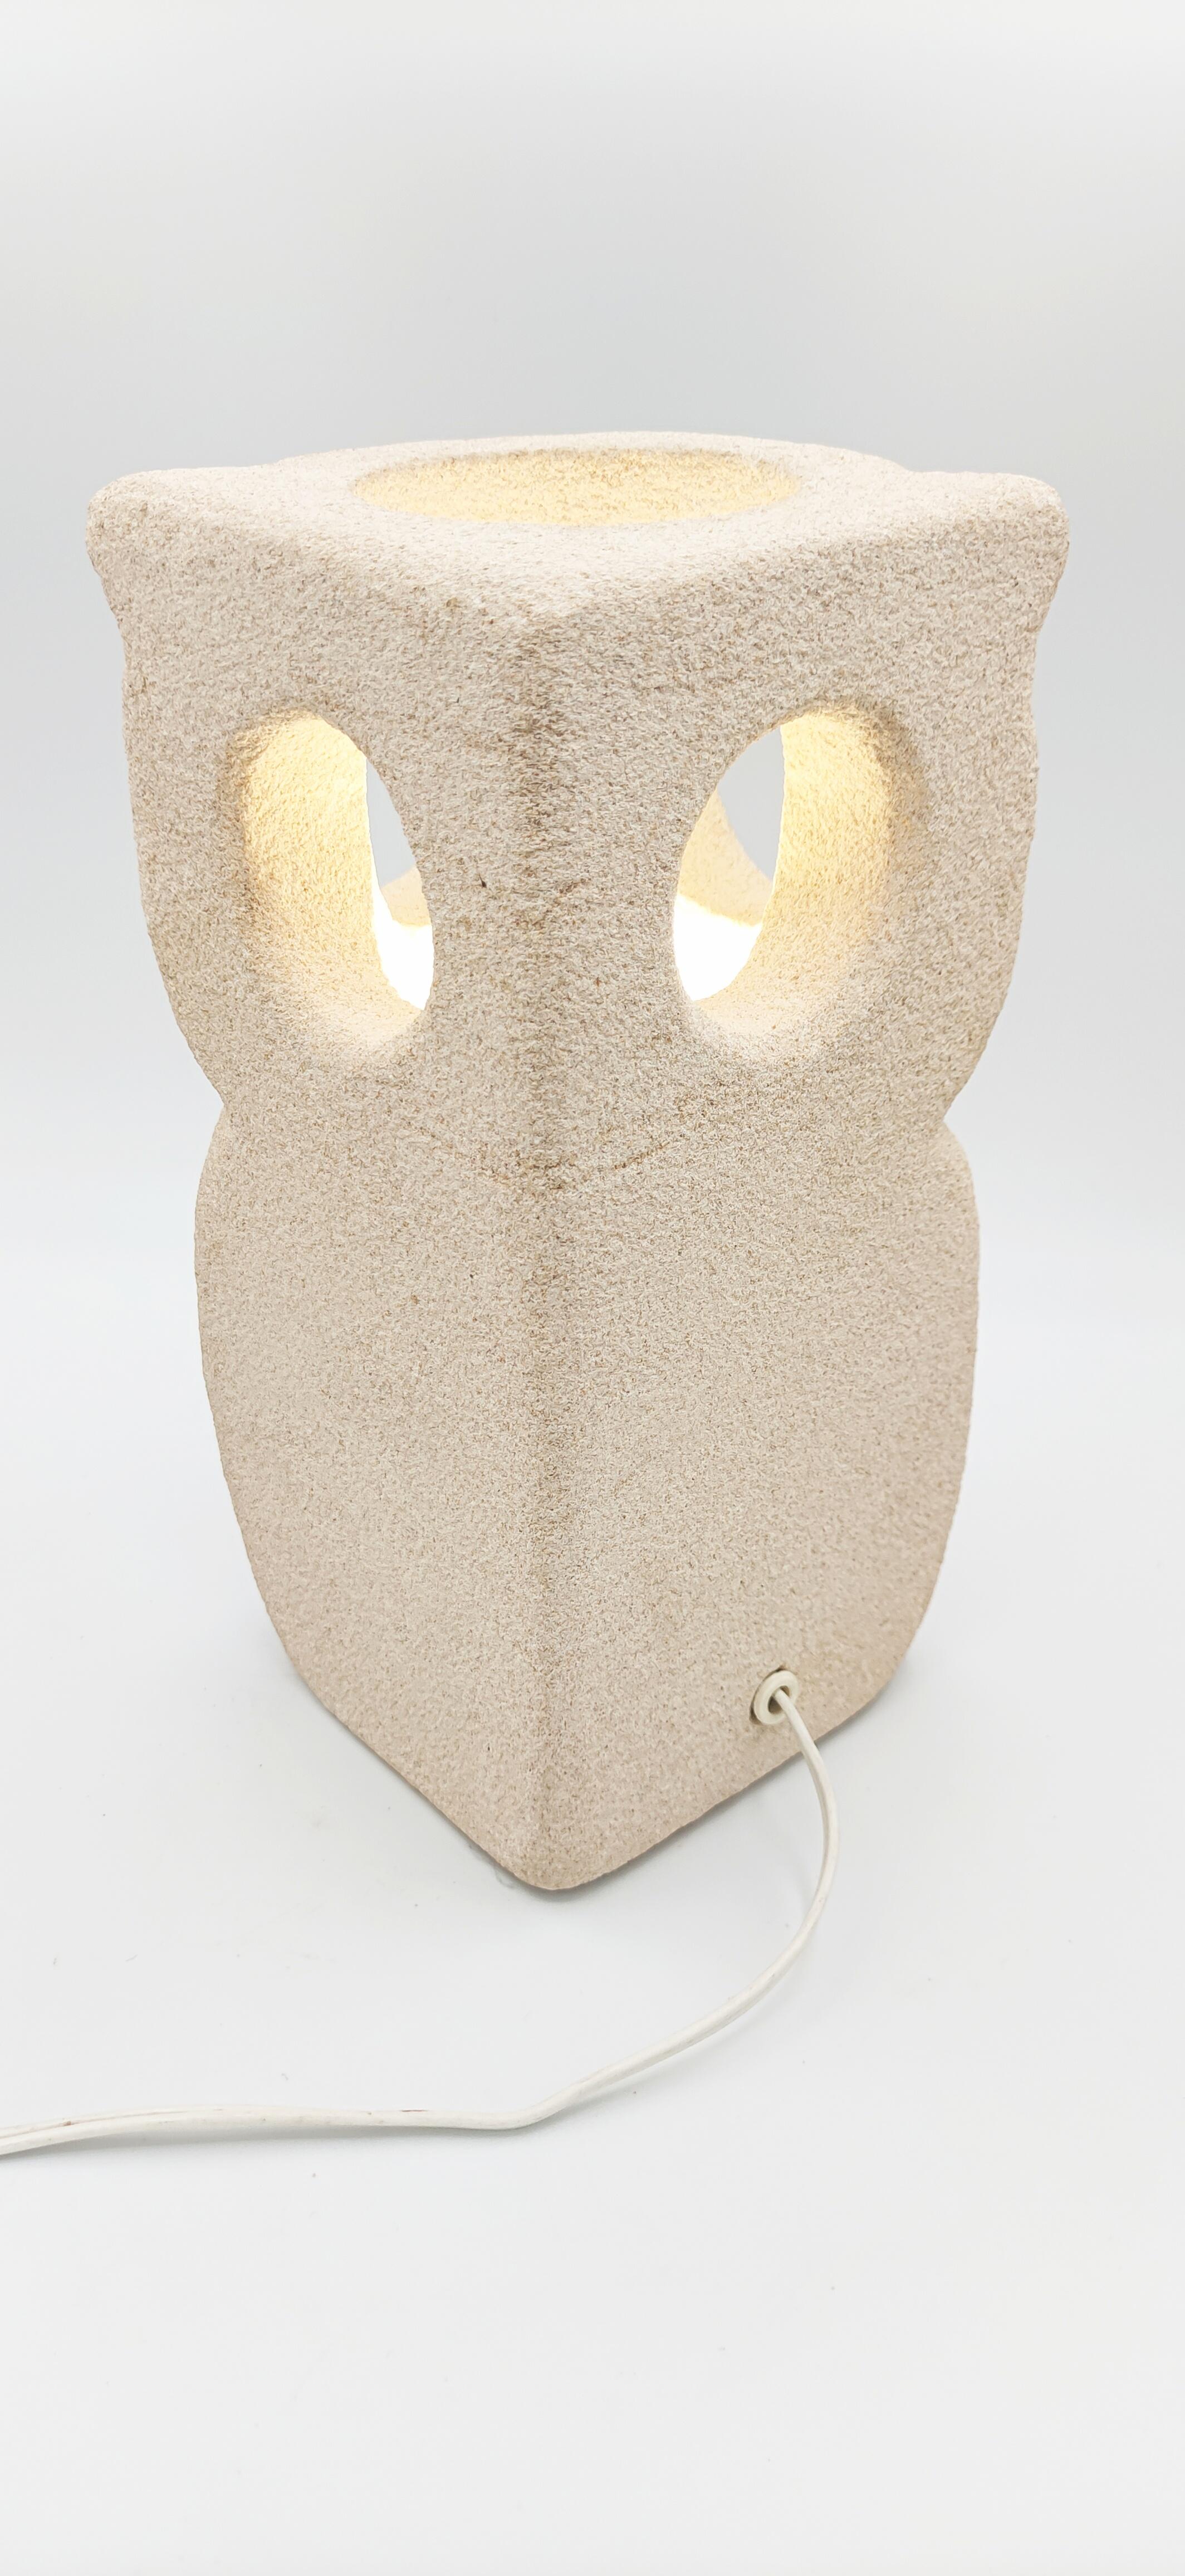 Albert Tormos Owl Table Lamp, France 1970s For Sale 2